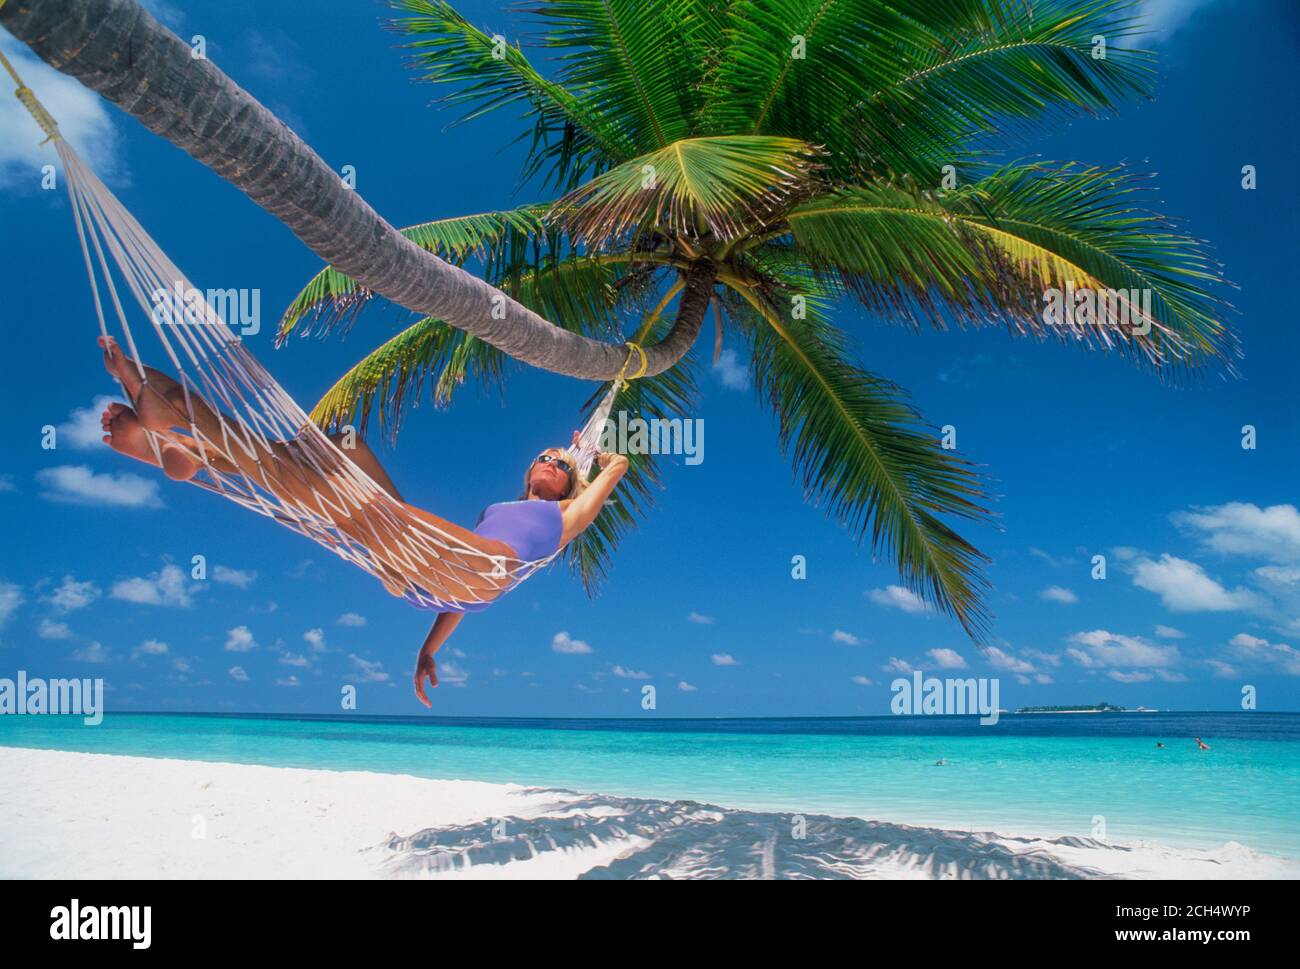 Woman in hammock under palm tree in Maldive Islands Stock Photo